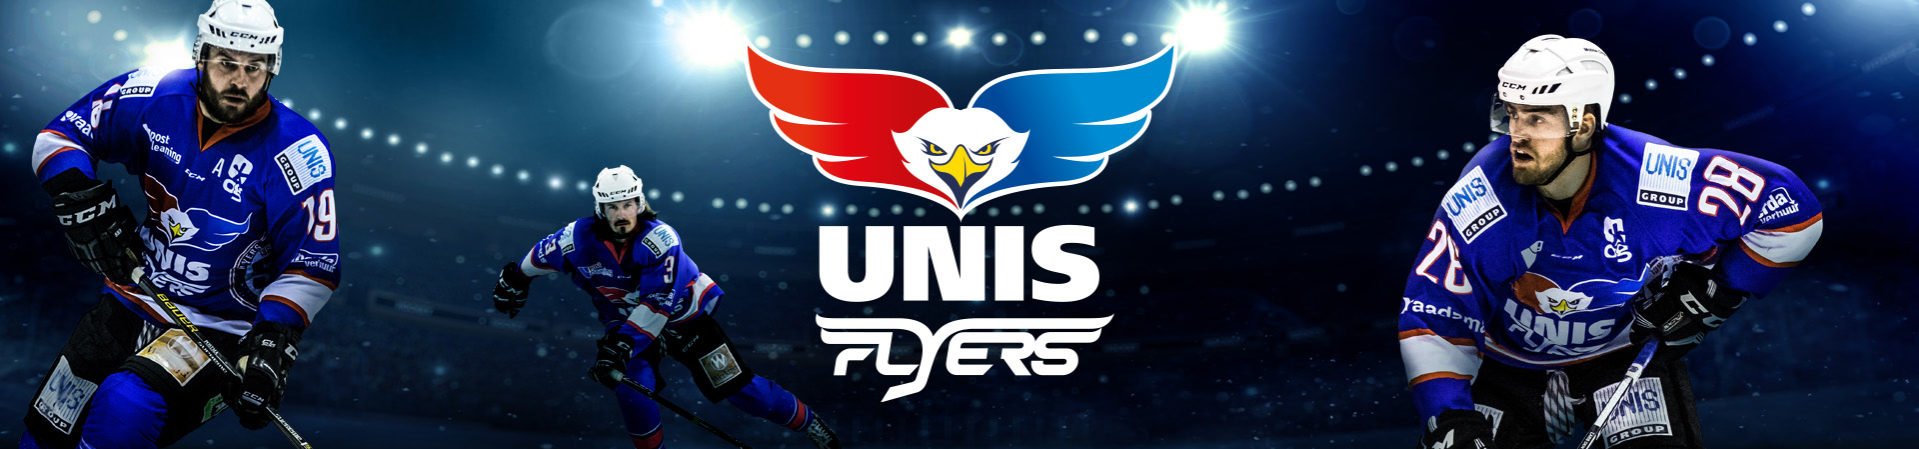 Ijshockey seizoen Unis flyers 2019/2020